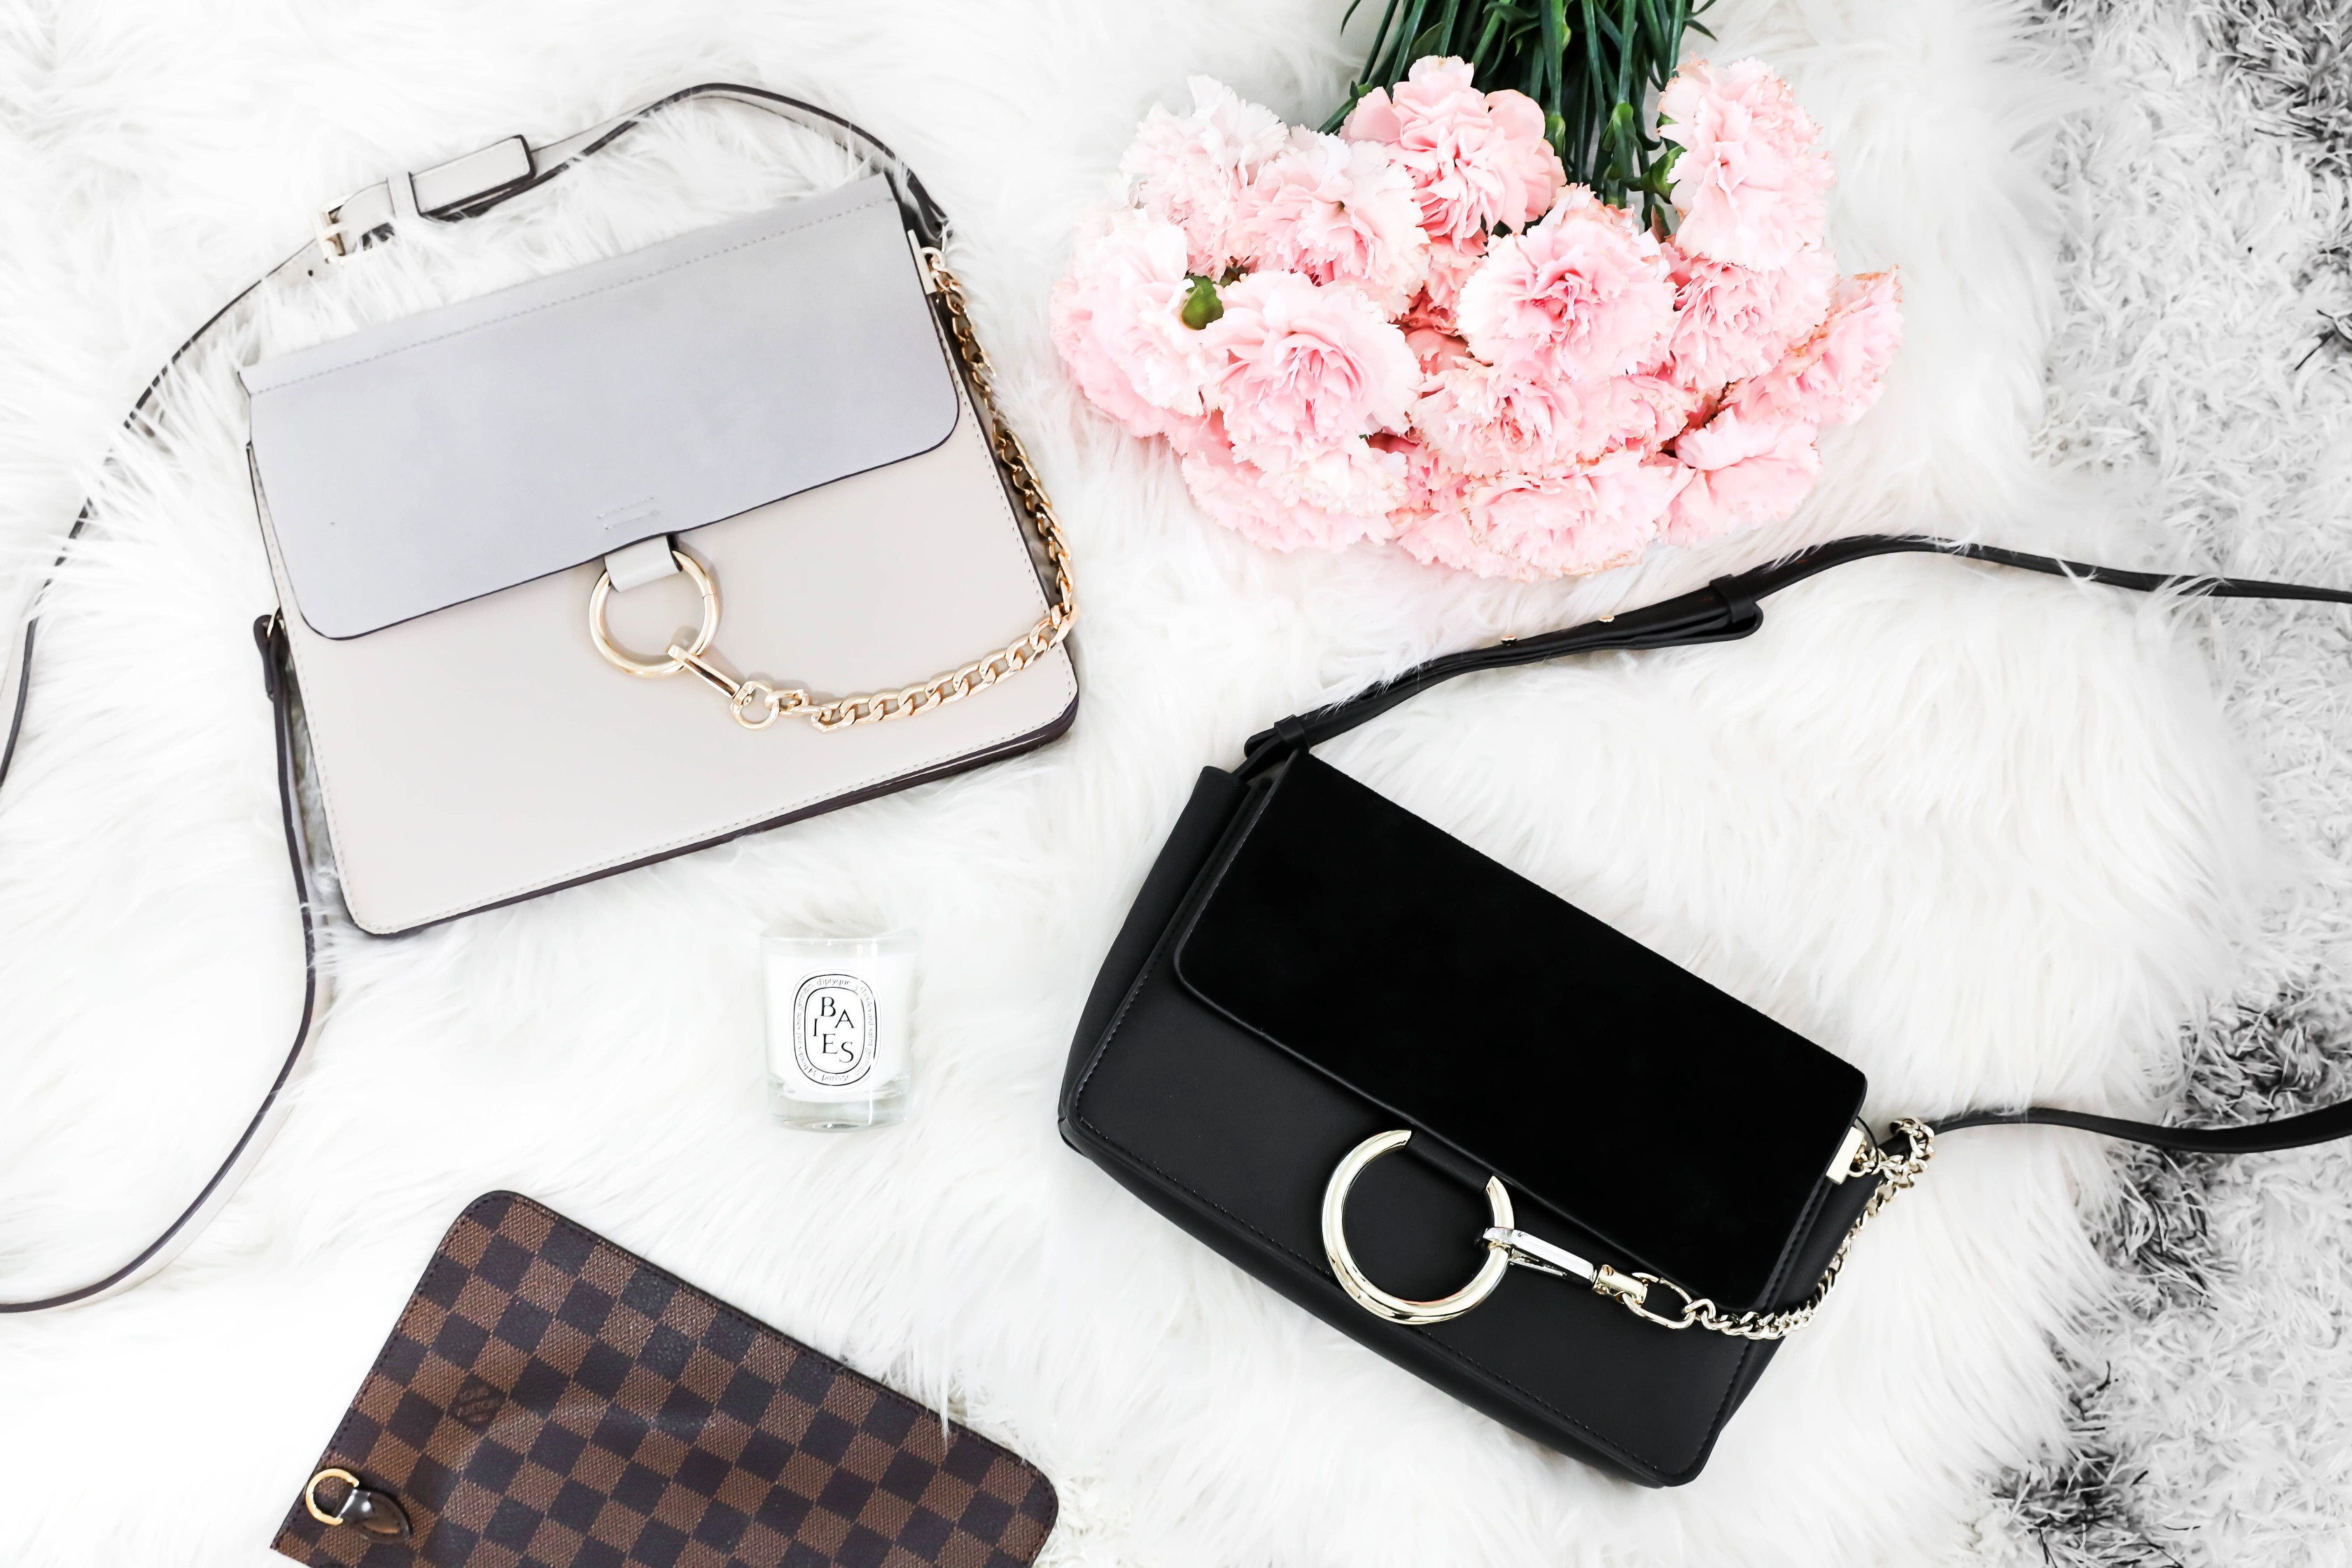 Designer Look Alike Handbags Amazon